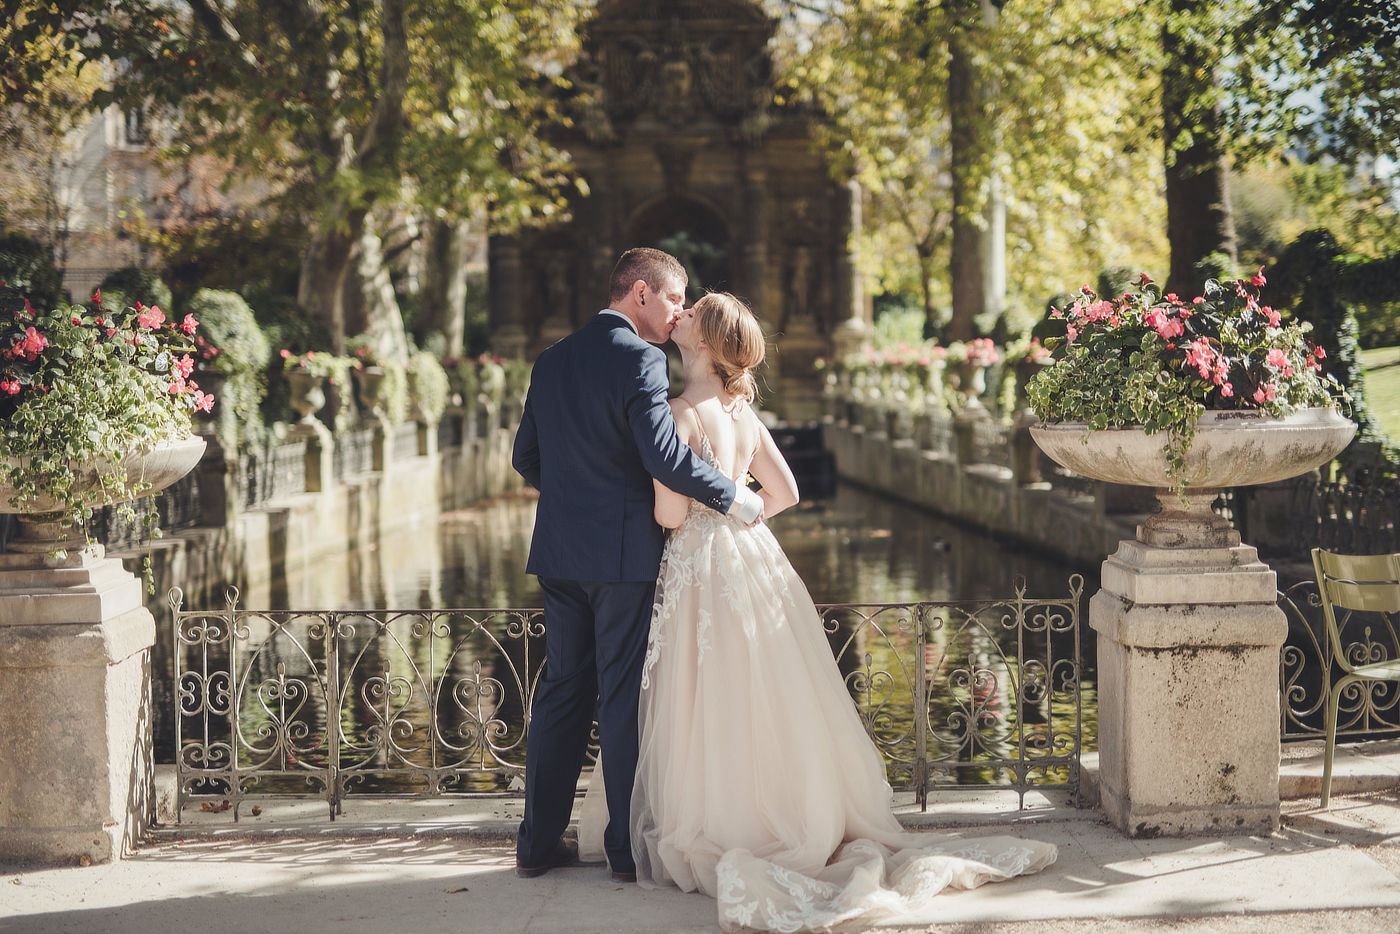 Paris Château Wedding in Fontainebleau